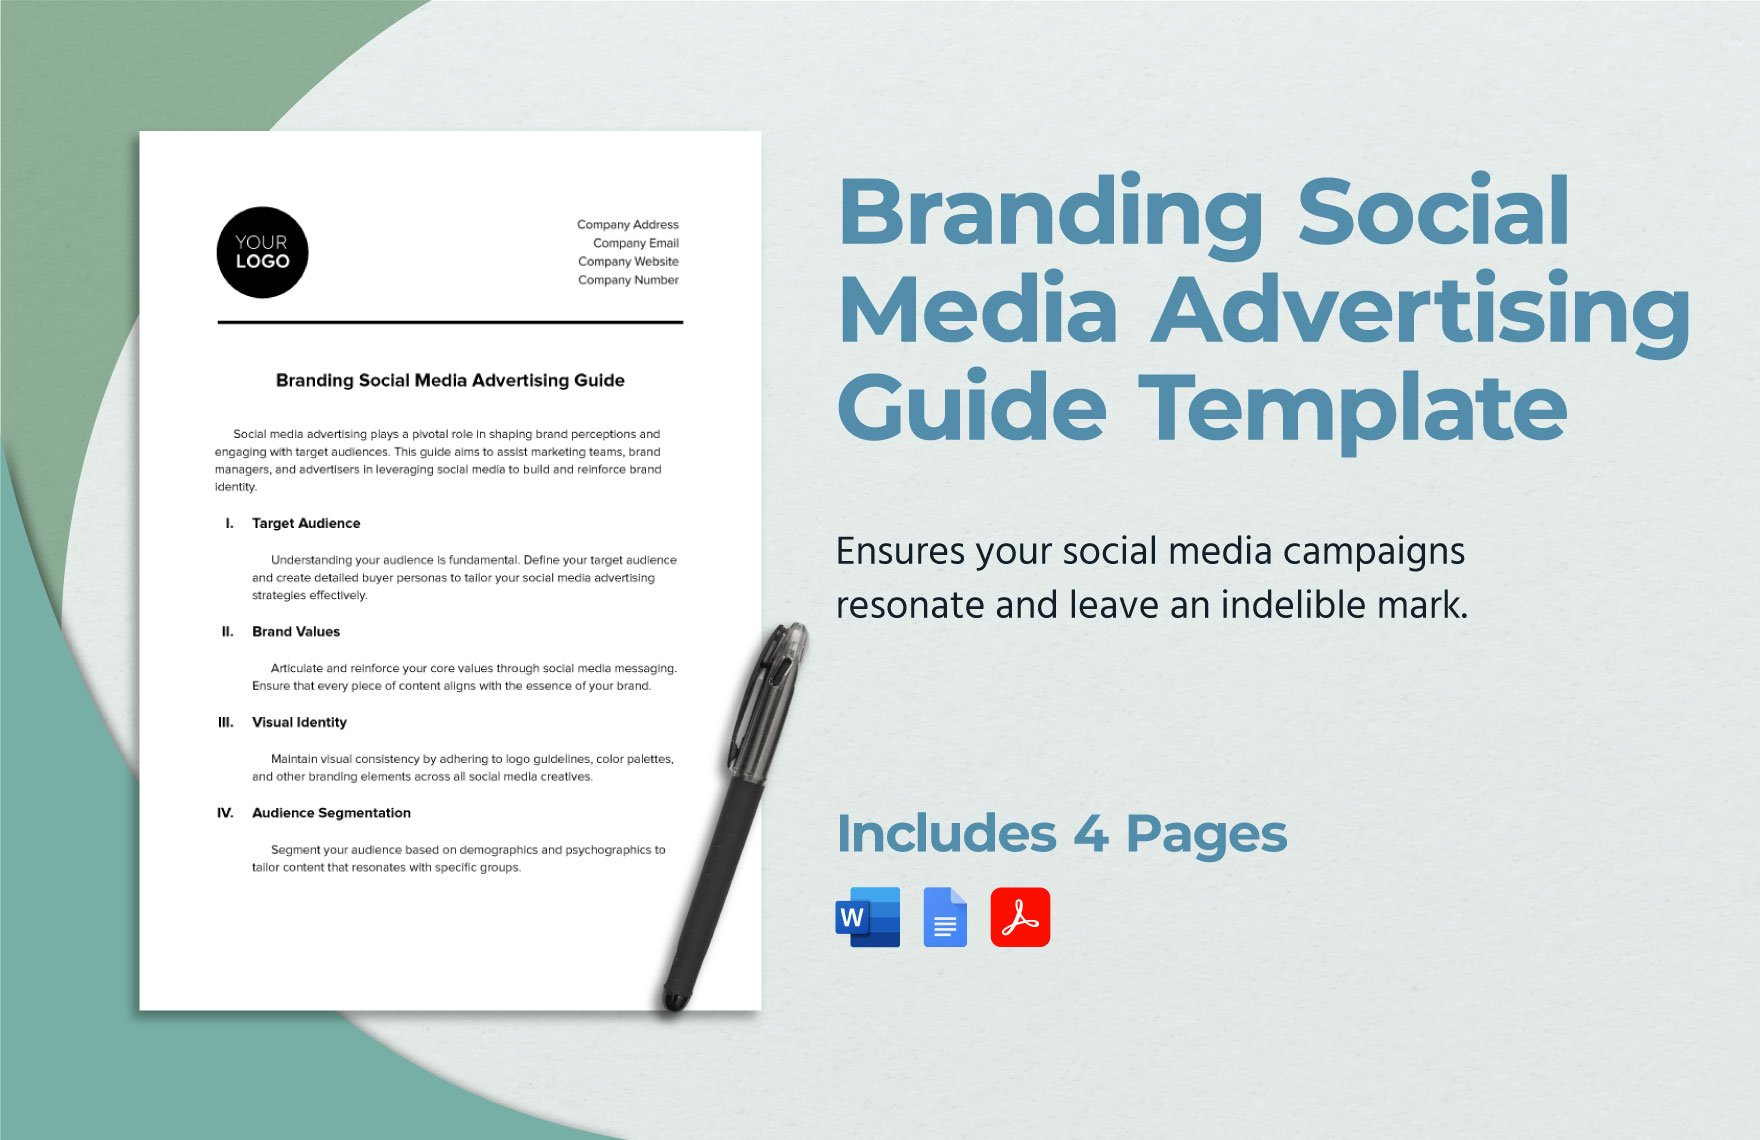 Branding Social Media Advertising Guide Template in Word, Google Docs, PDF